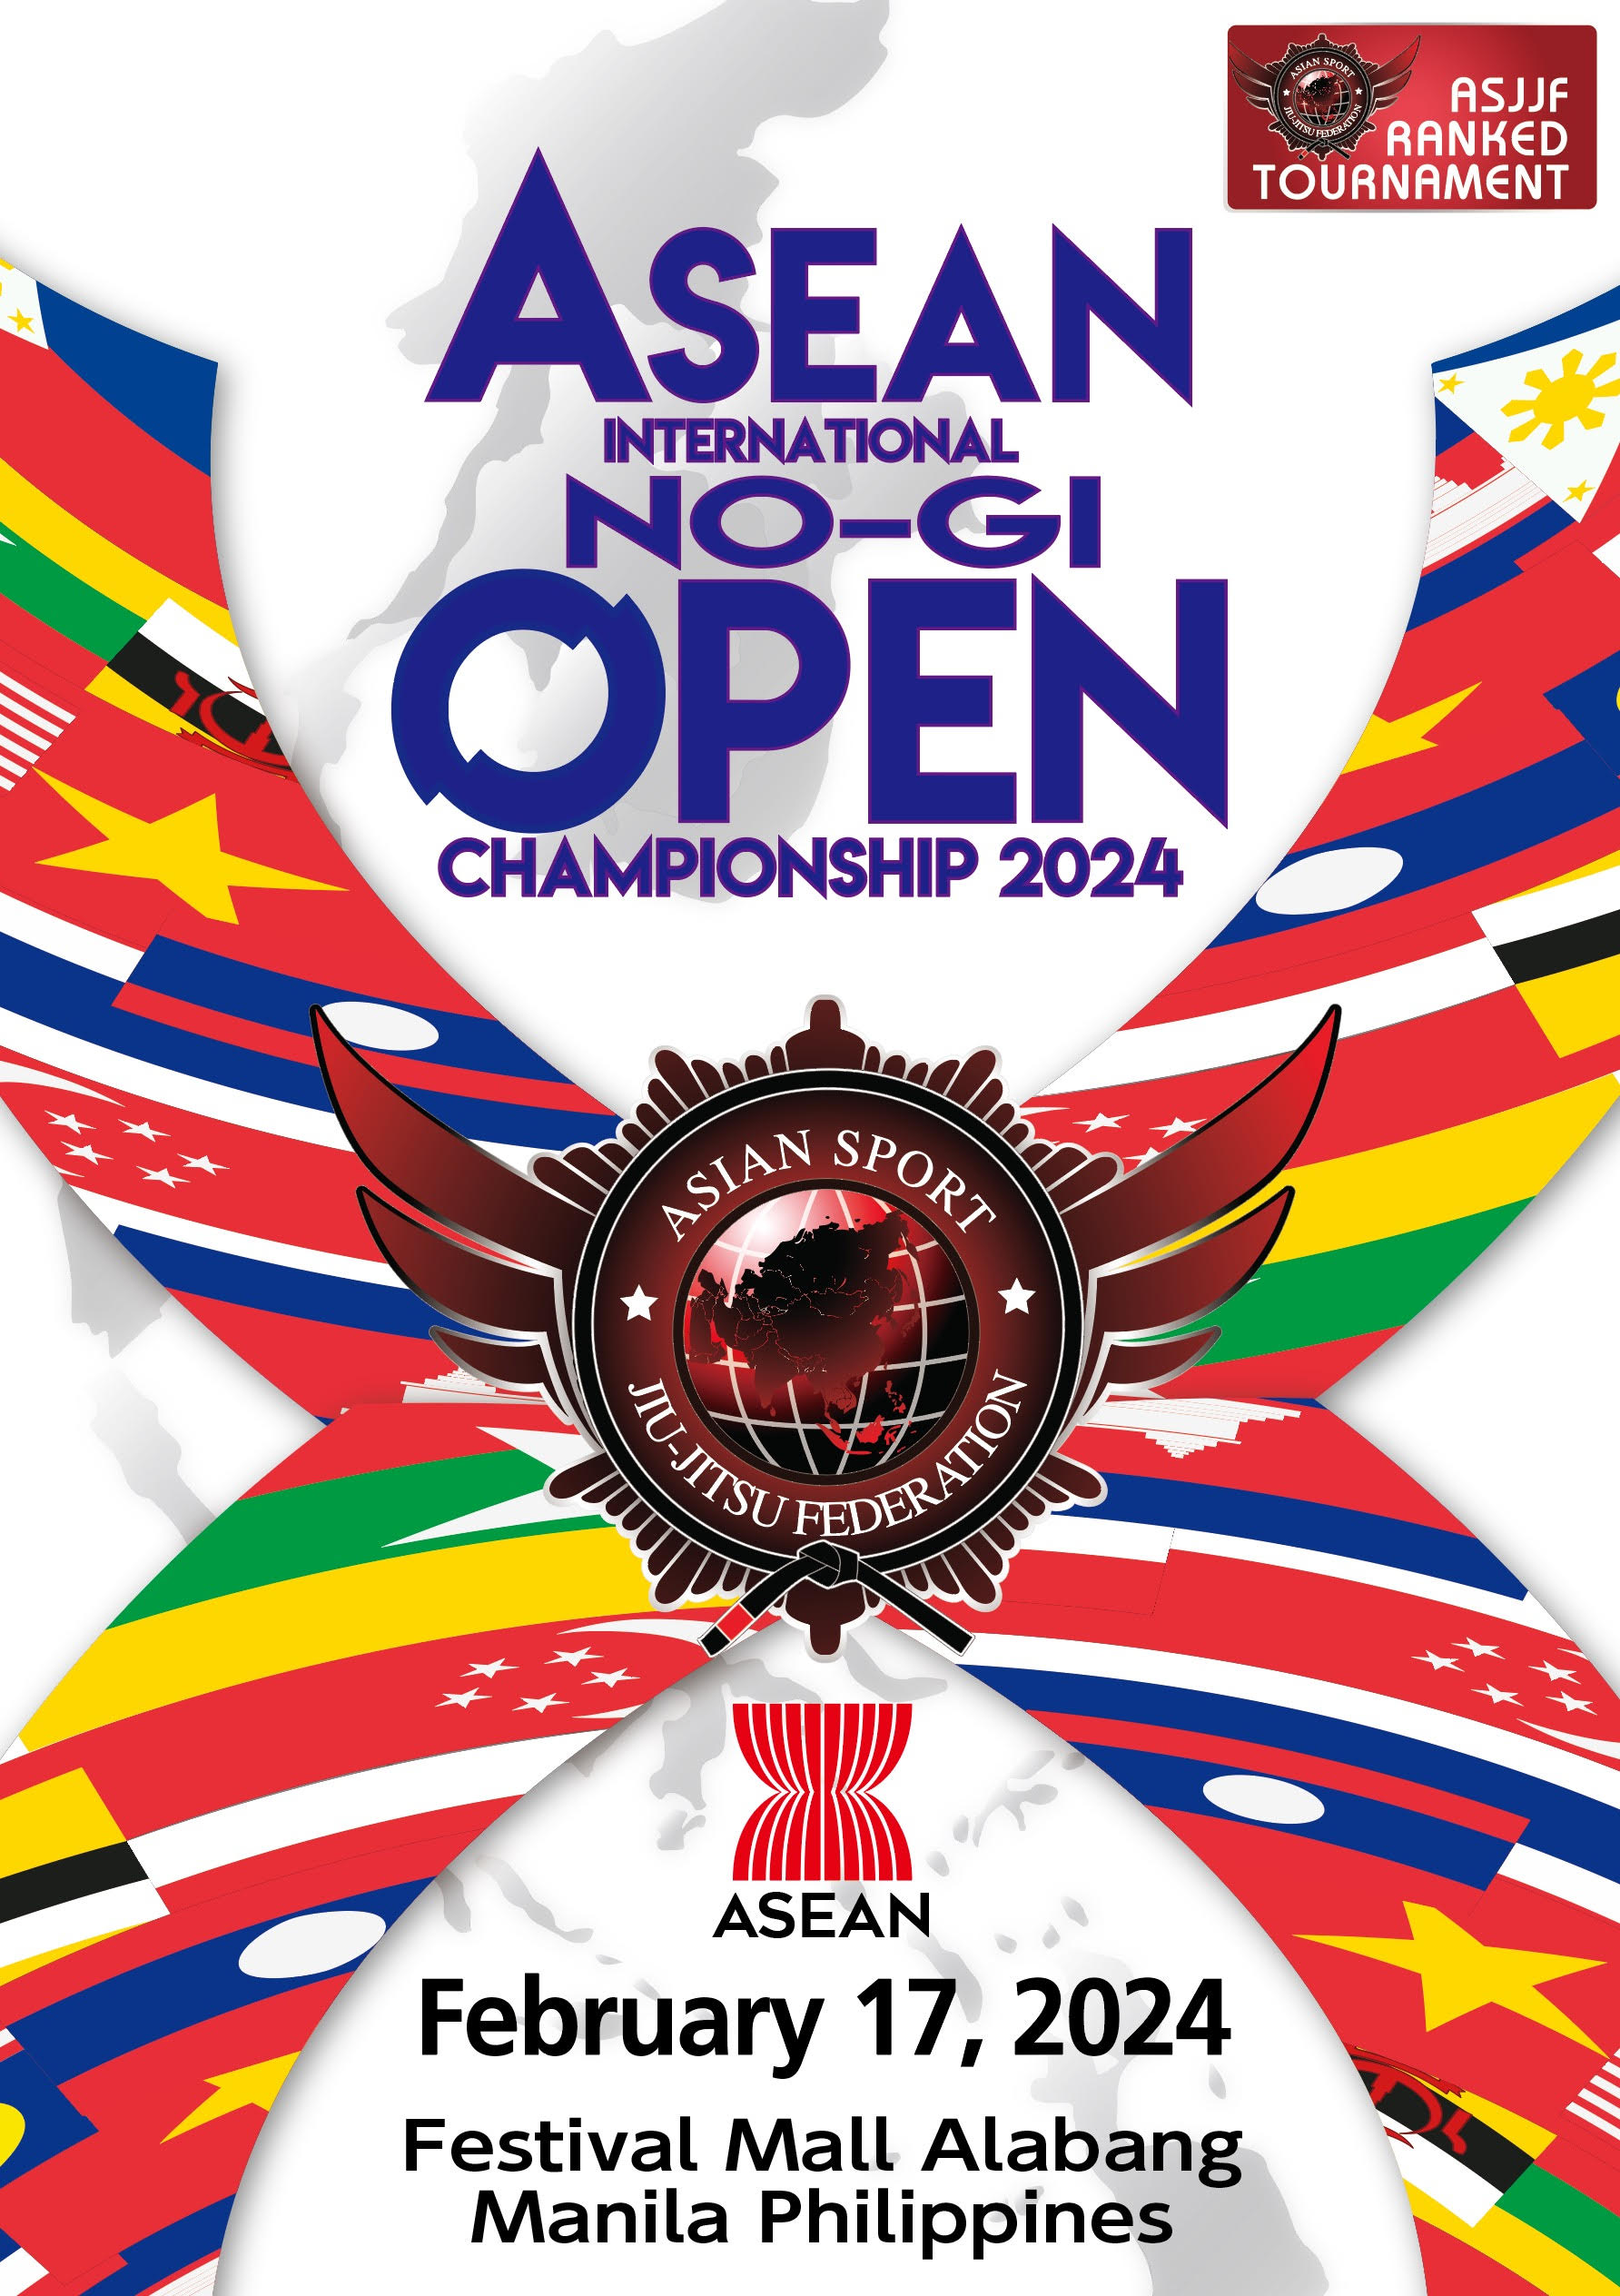 asean international no-gi open championship 2024